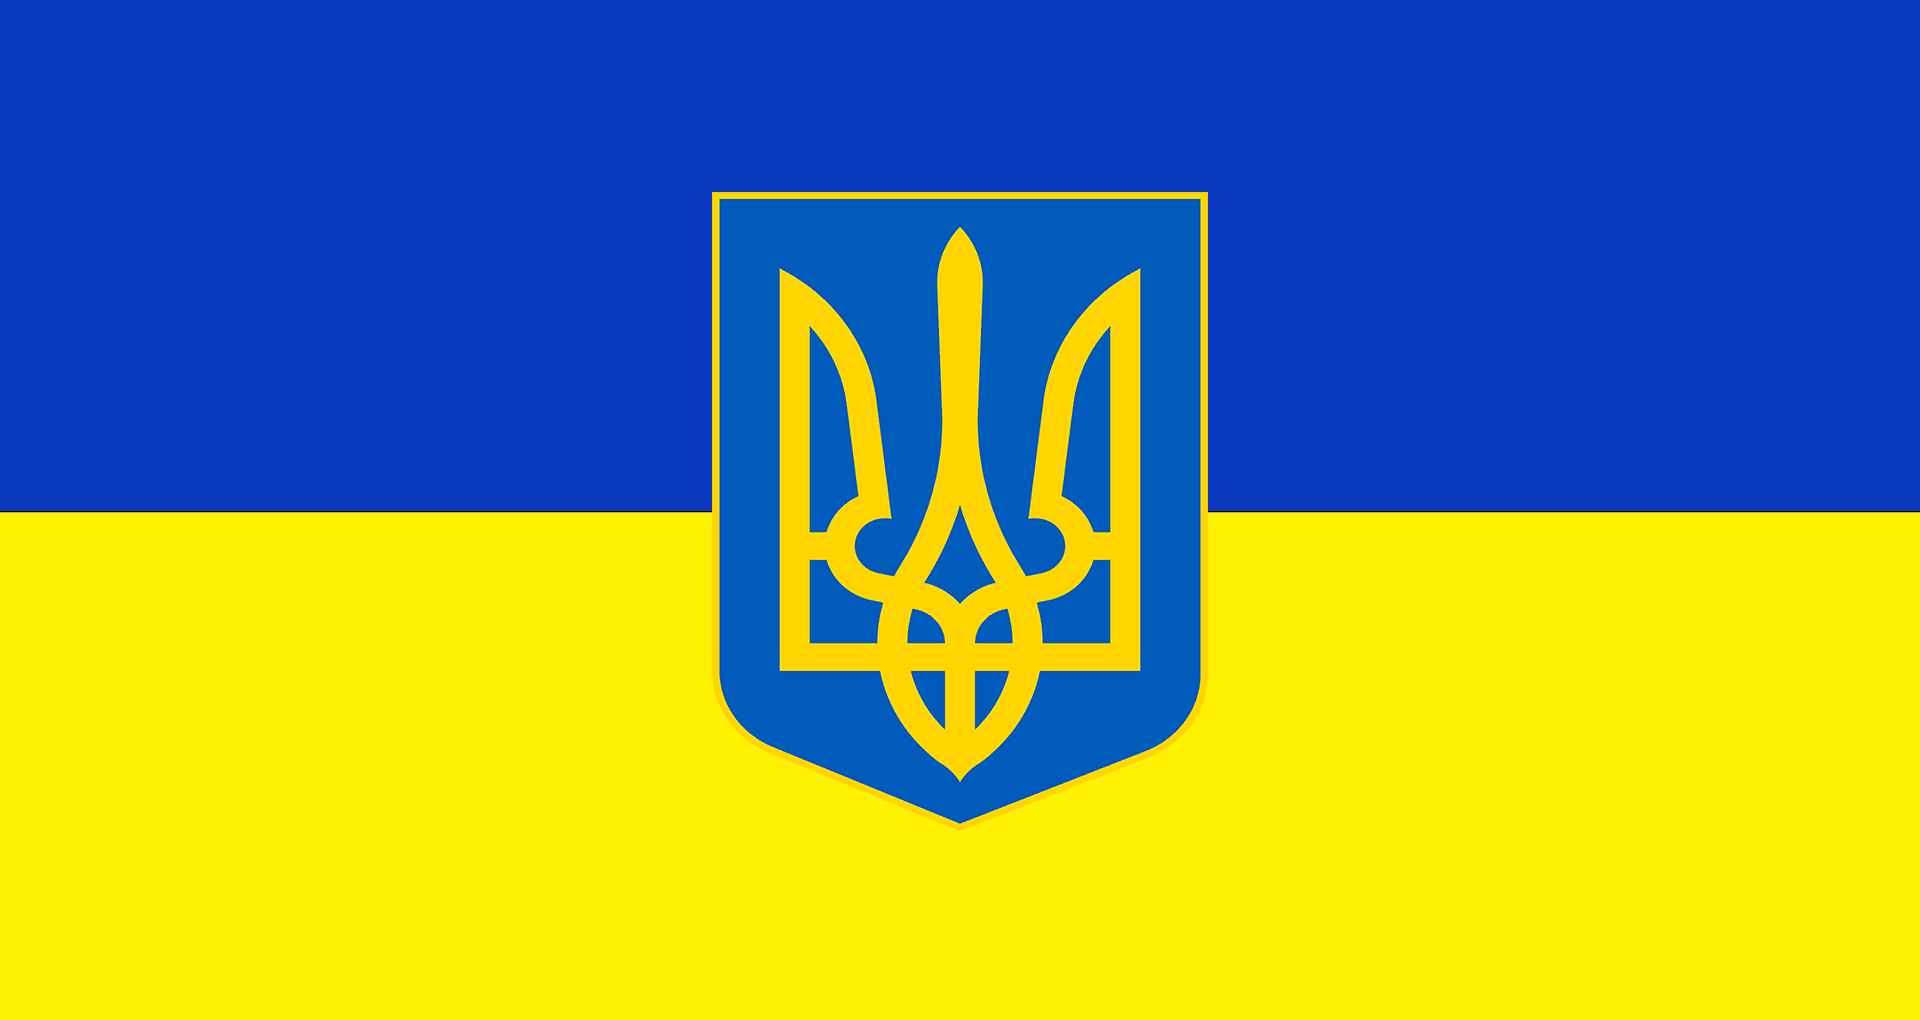 Flag of Ukraine with coat of arms (tryzub-тризуб)